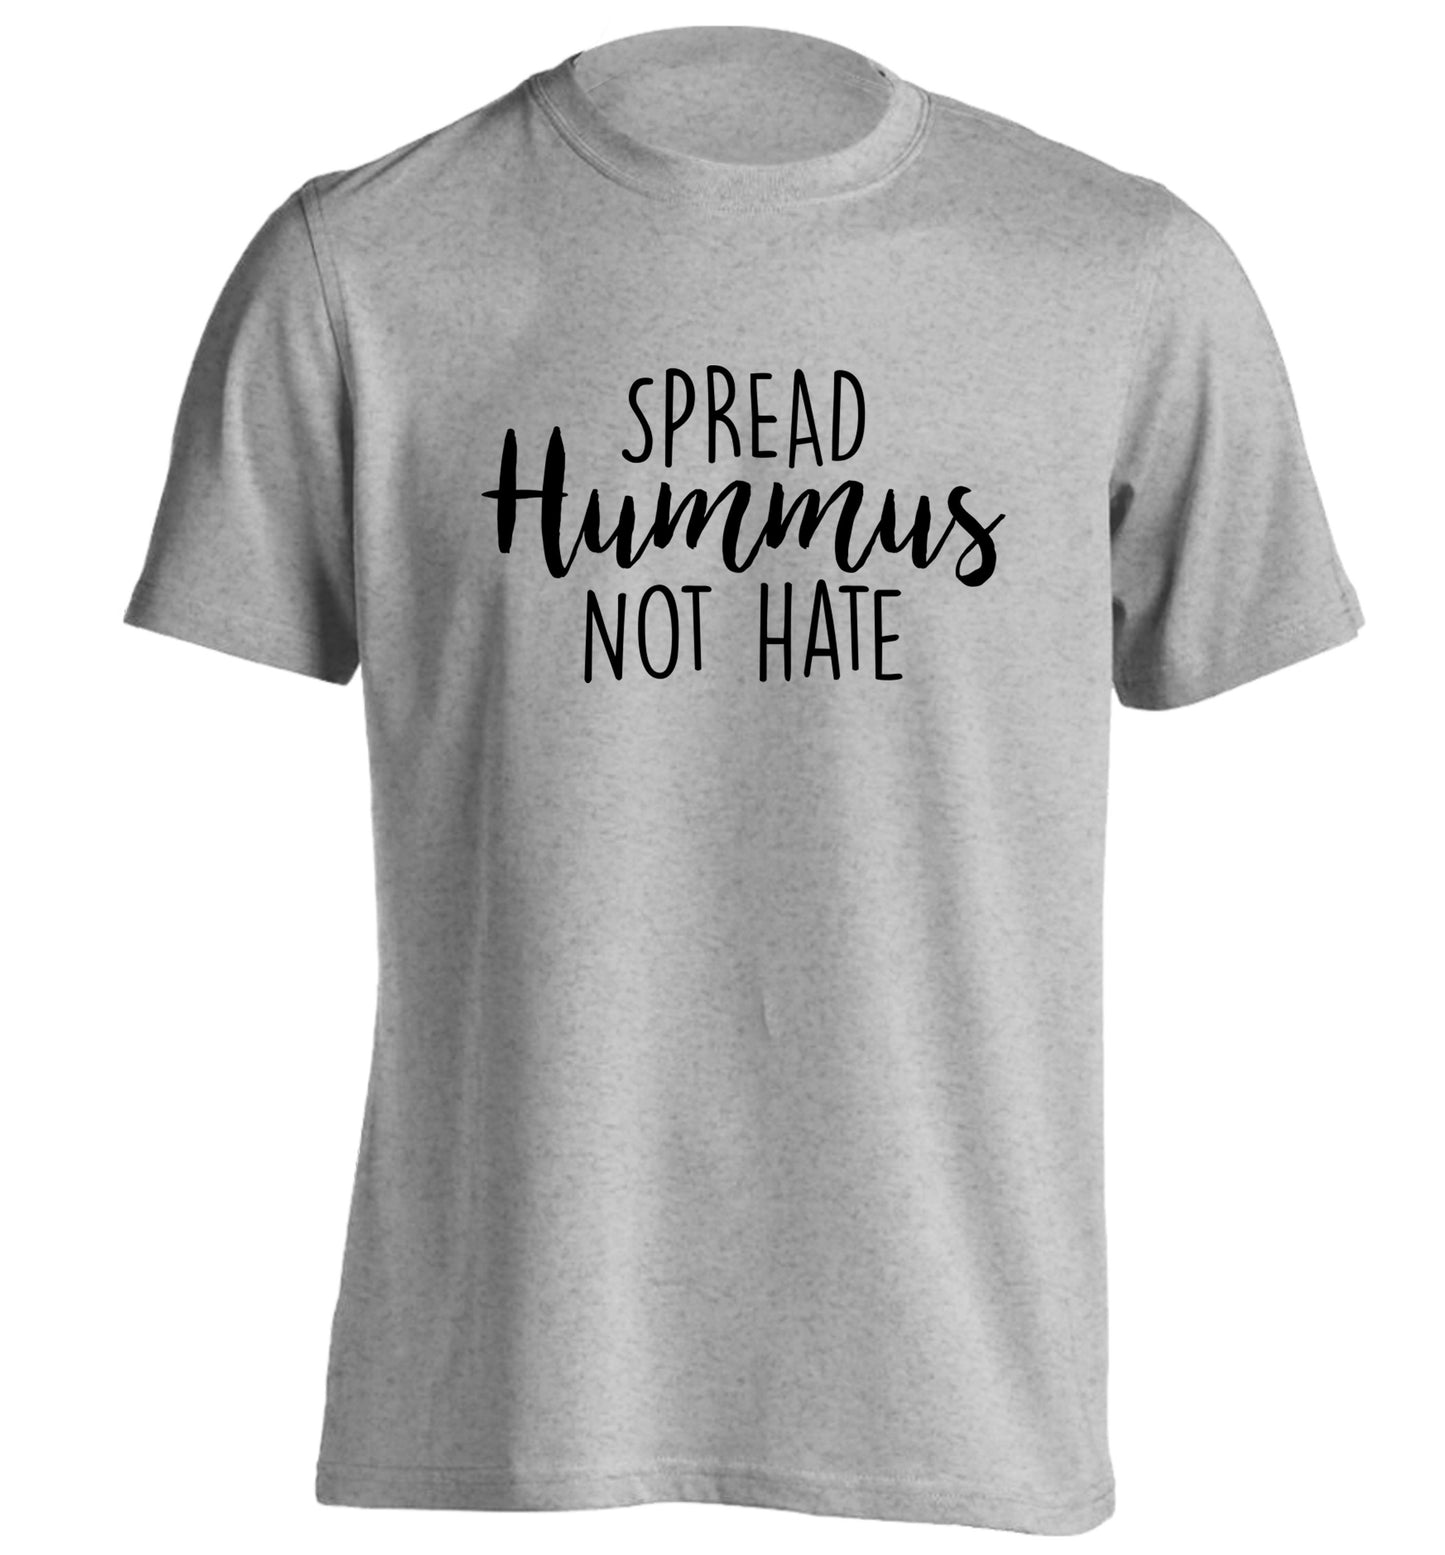 Spread hummus not hate script text adults unisex grey Tshirt 2XL